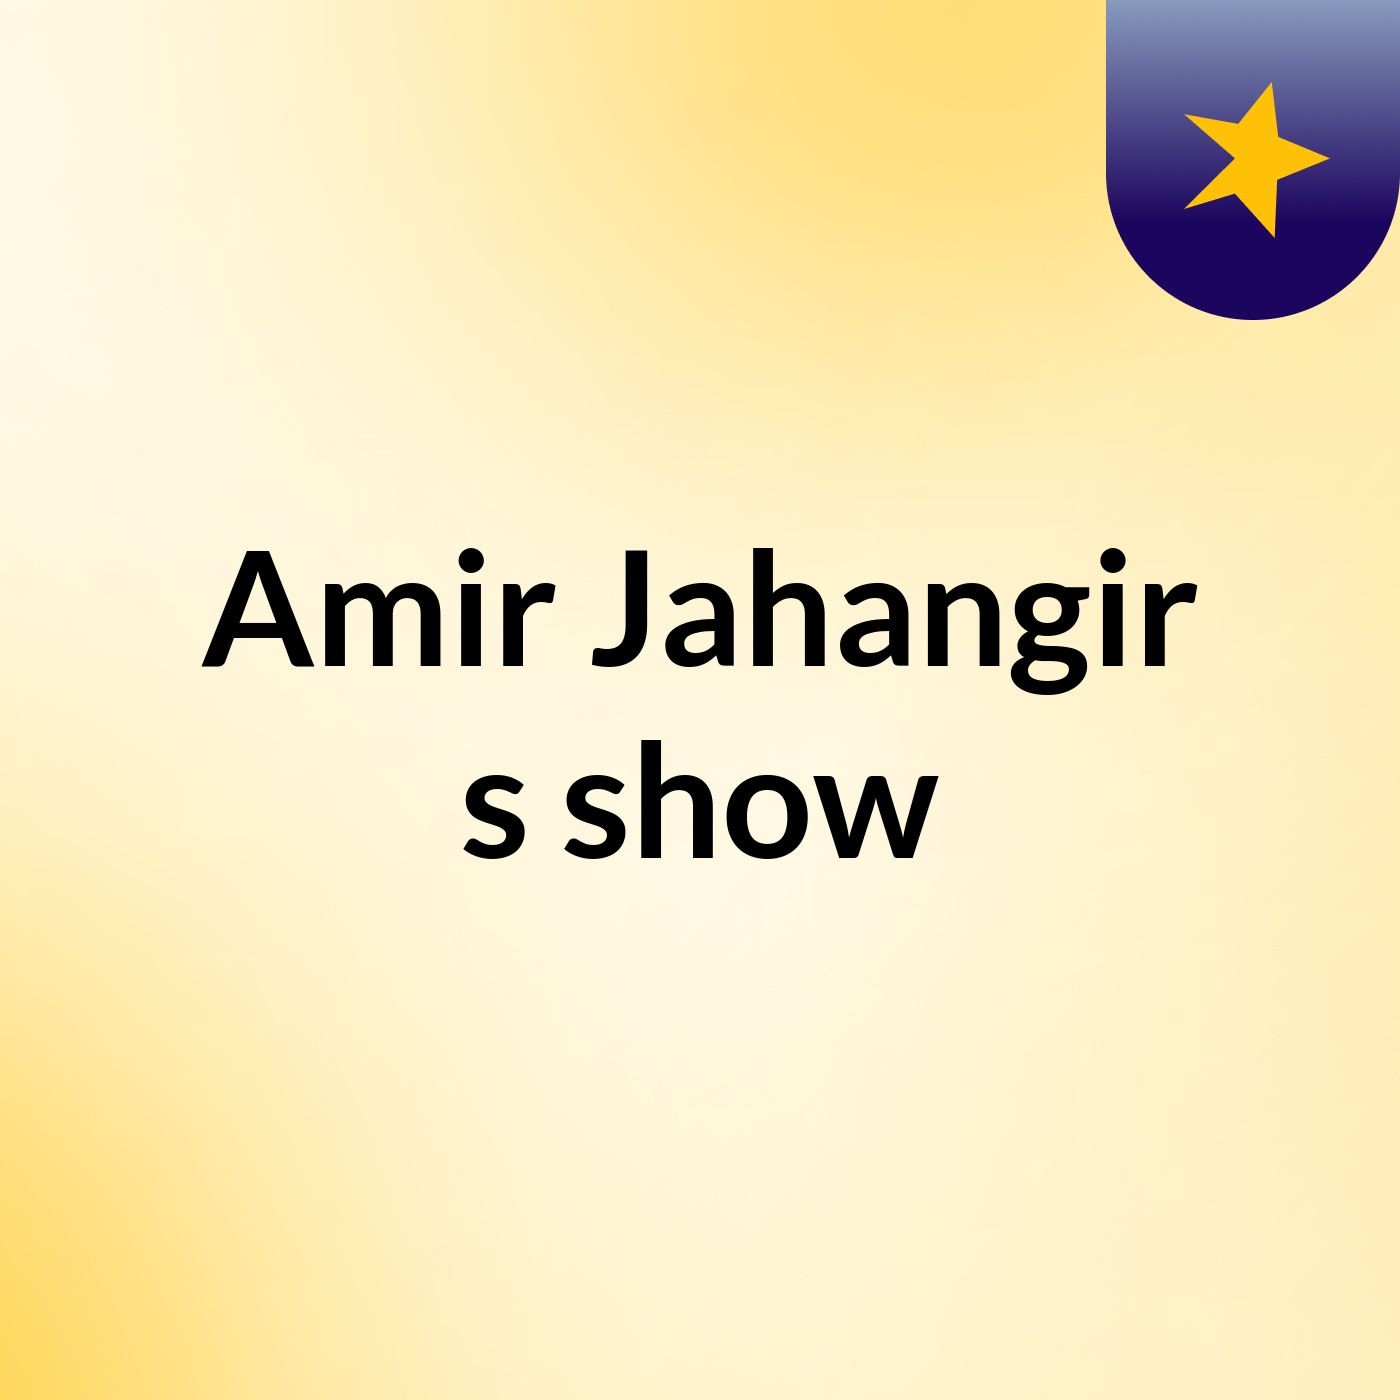 Amir Jahangir's show